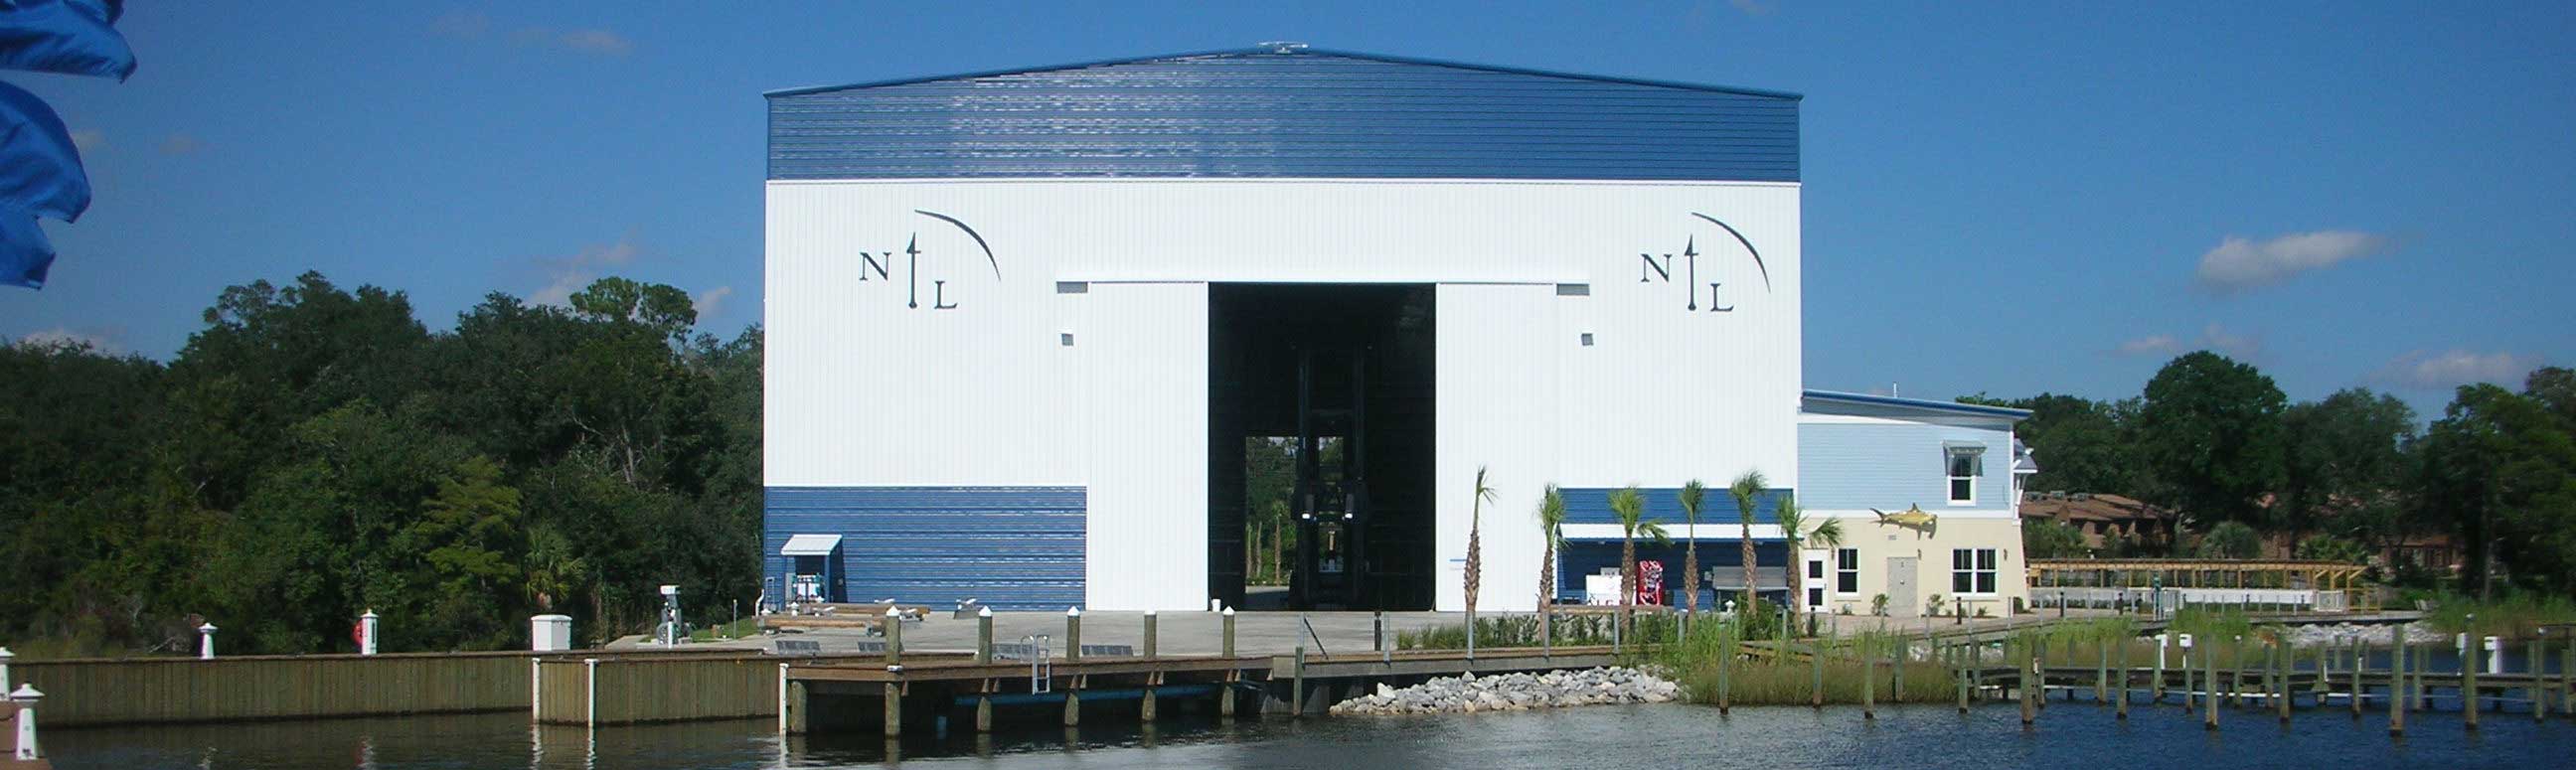 North Light Yacht Club | MRD associates, inc. Niceville, Florida